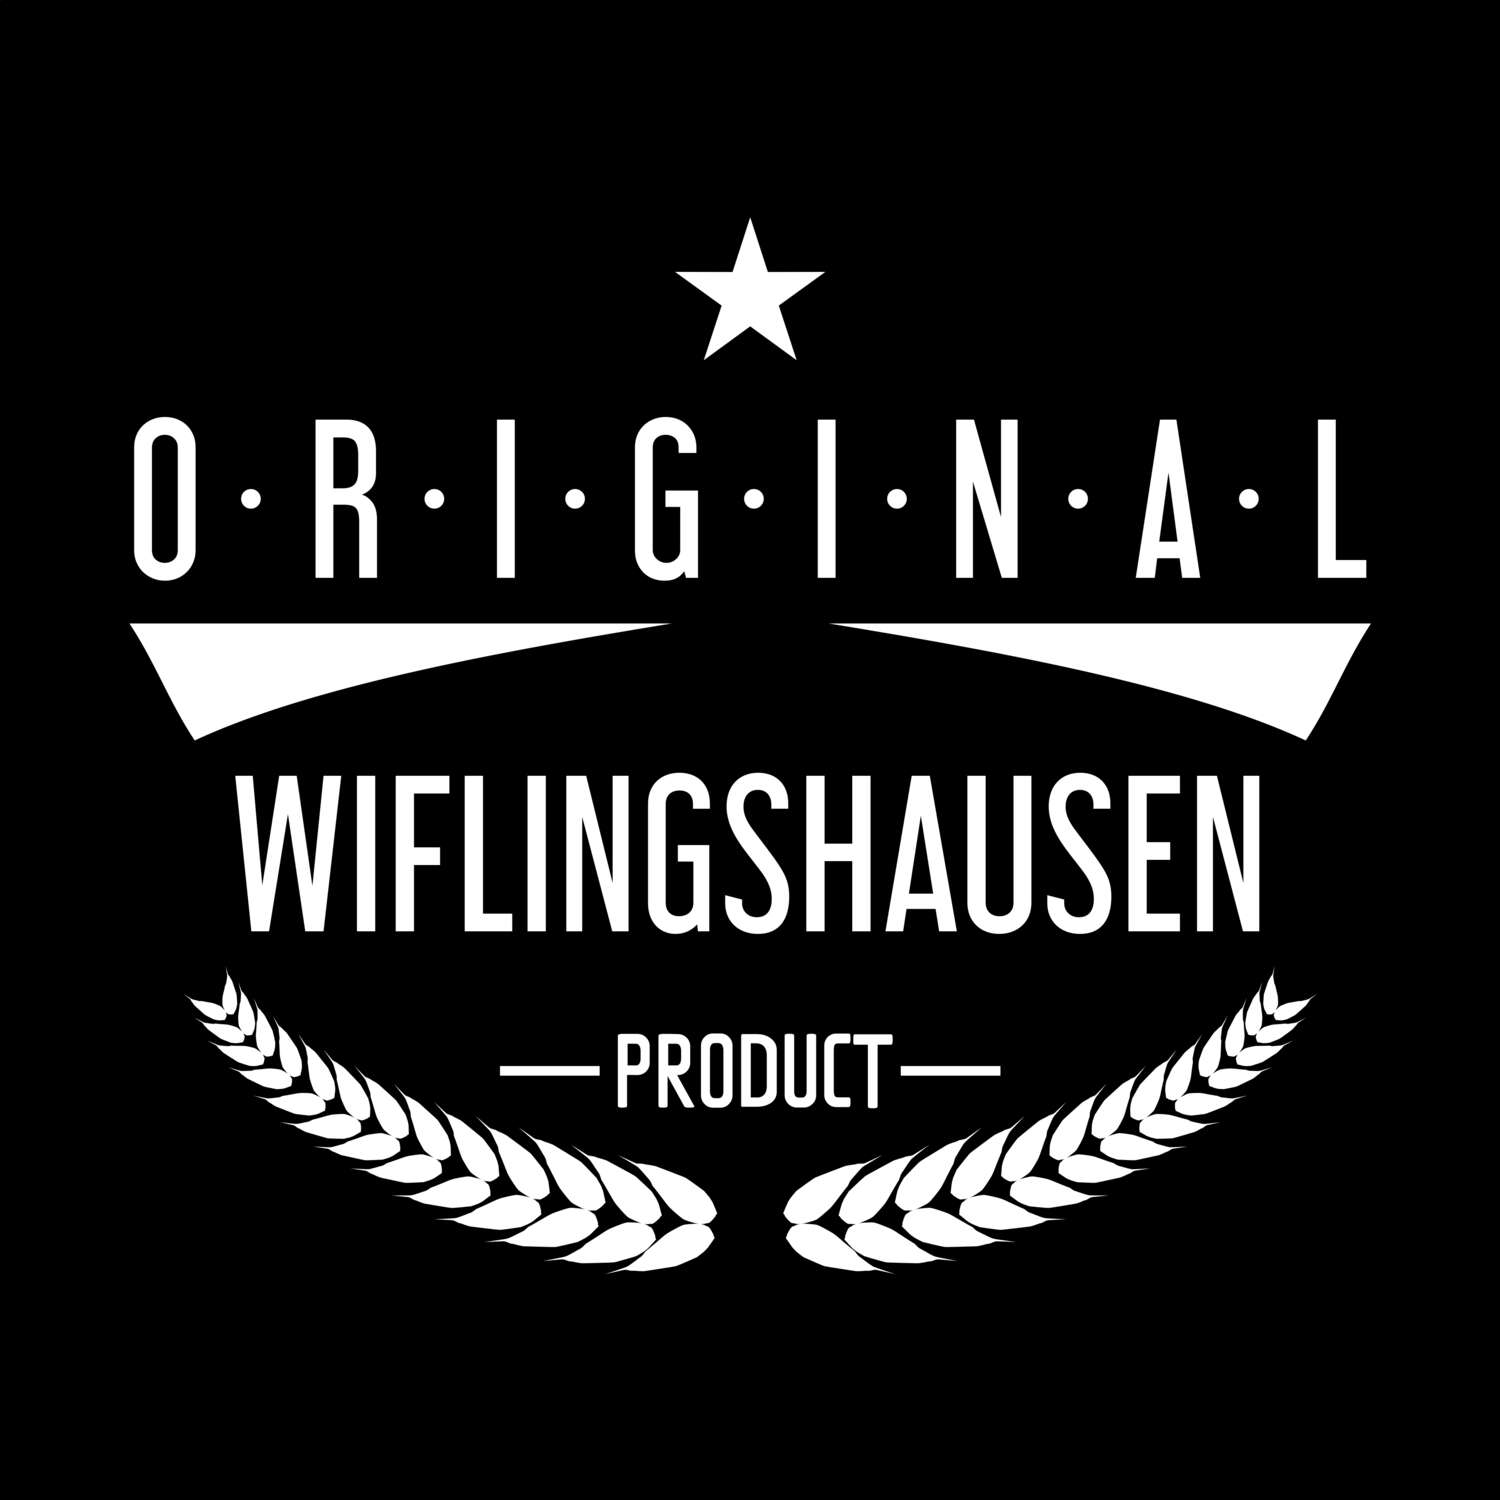 Wiflingshausen T-Shirt »Original Product«